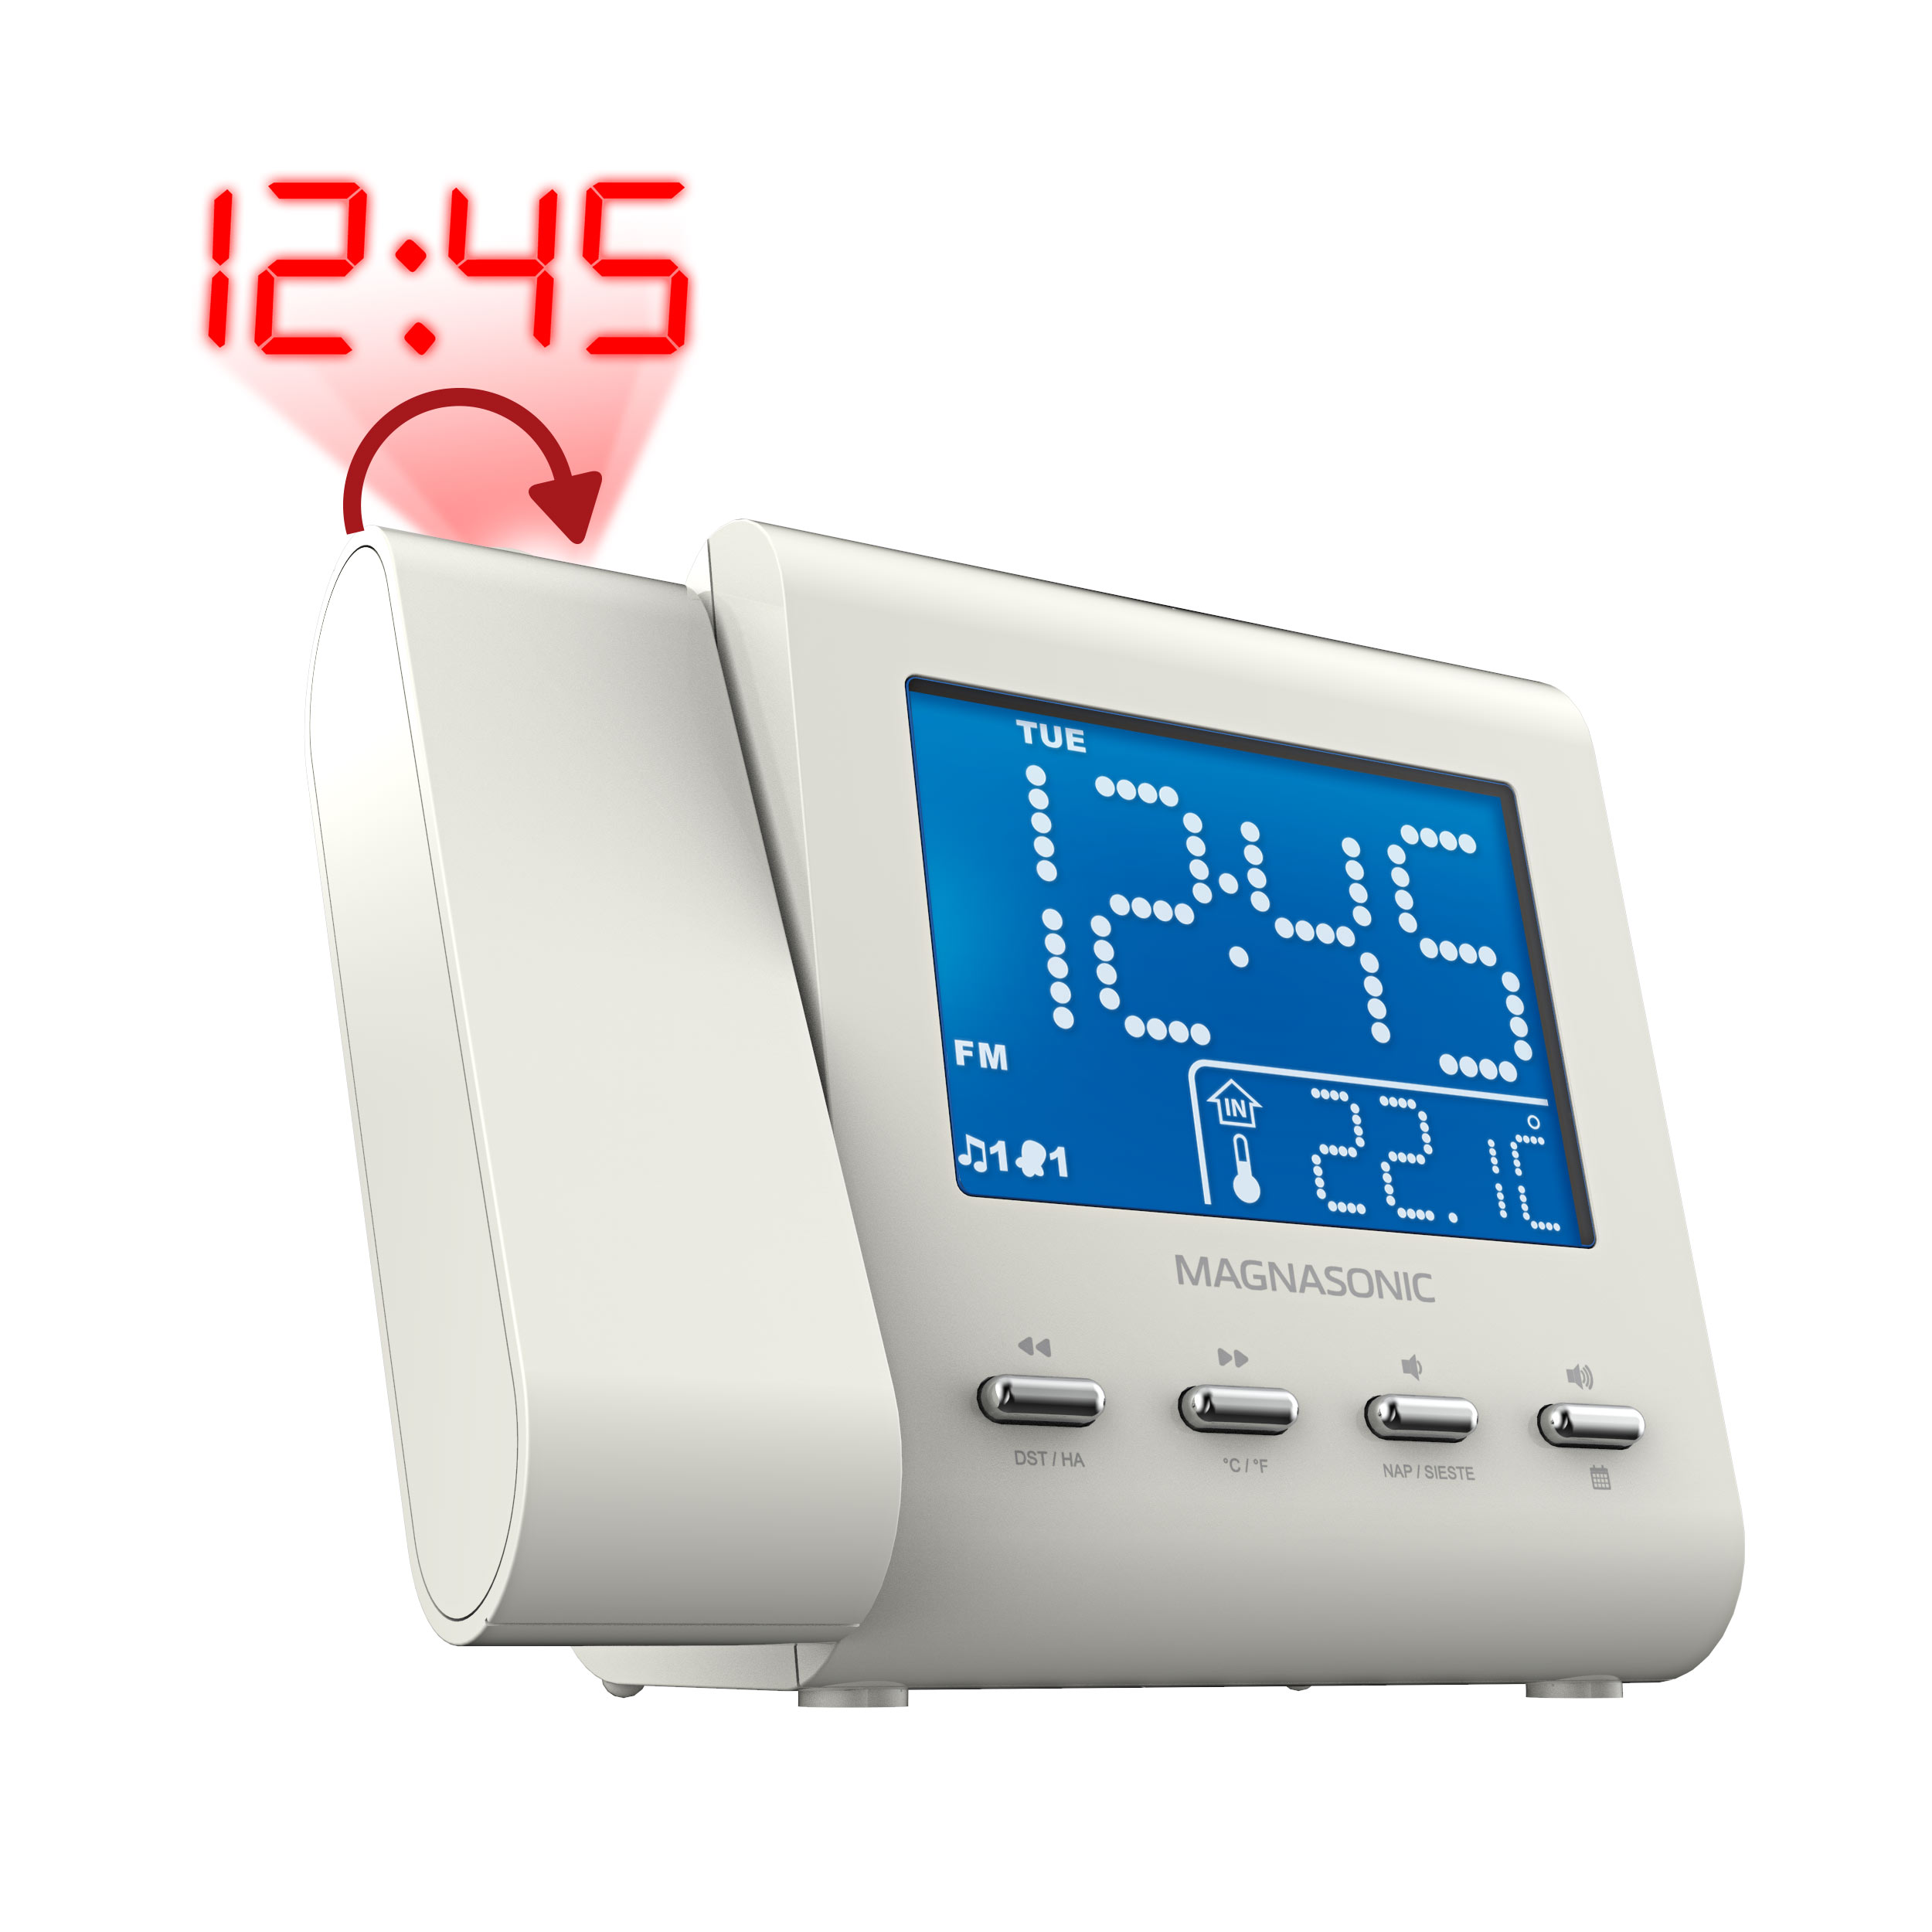 Magnasonic Projection Alarm Clock with AM/FM Radio, Battery Backup, Auto Time Set, Dual Alarm & 3.5mm Aux Input - White